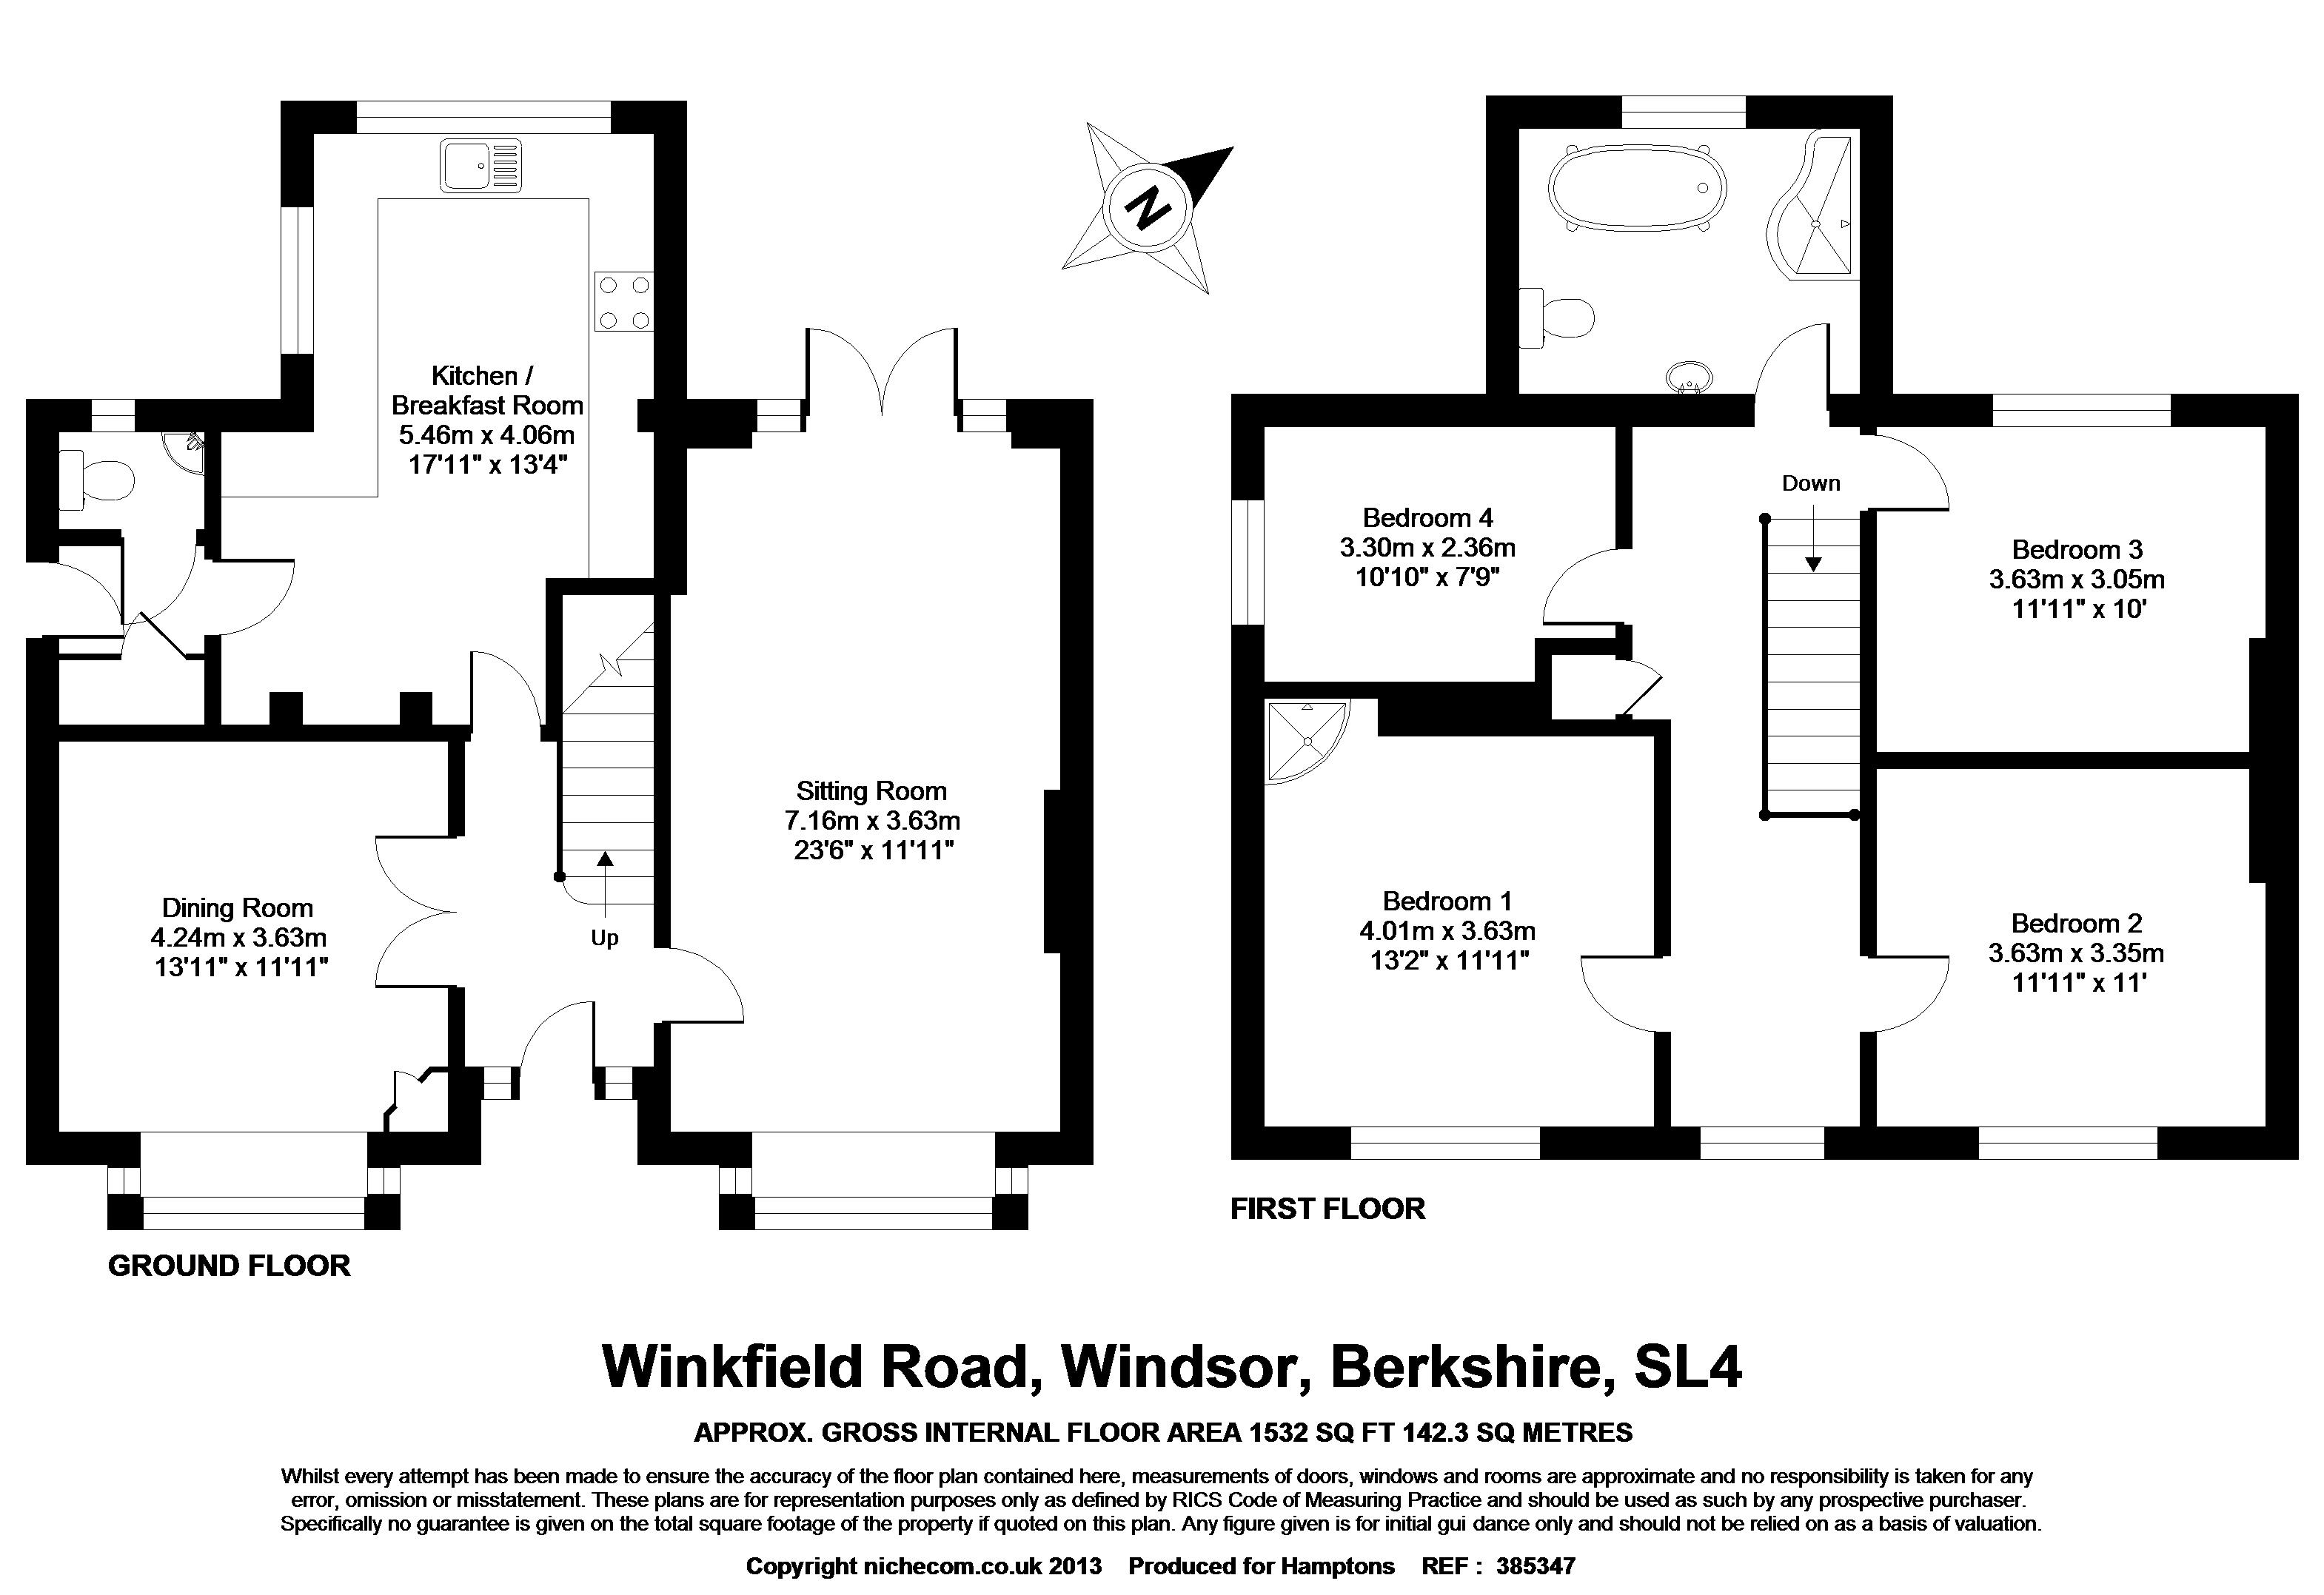 4 Bedrooms Detached house to rent in Winkfield Road, Windsor SL4